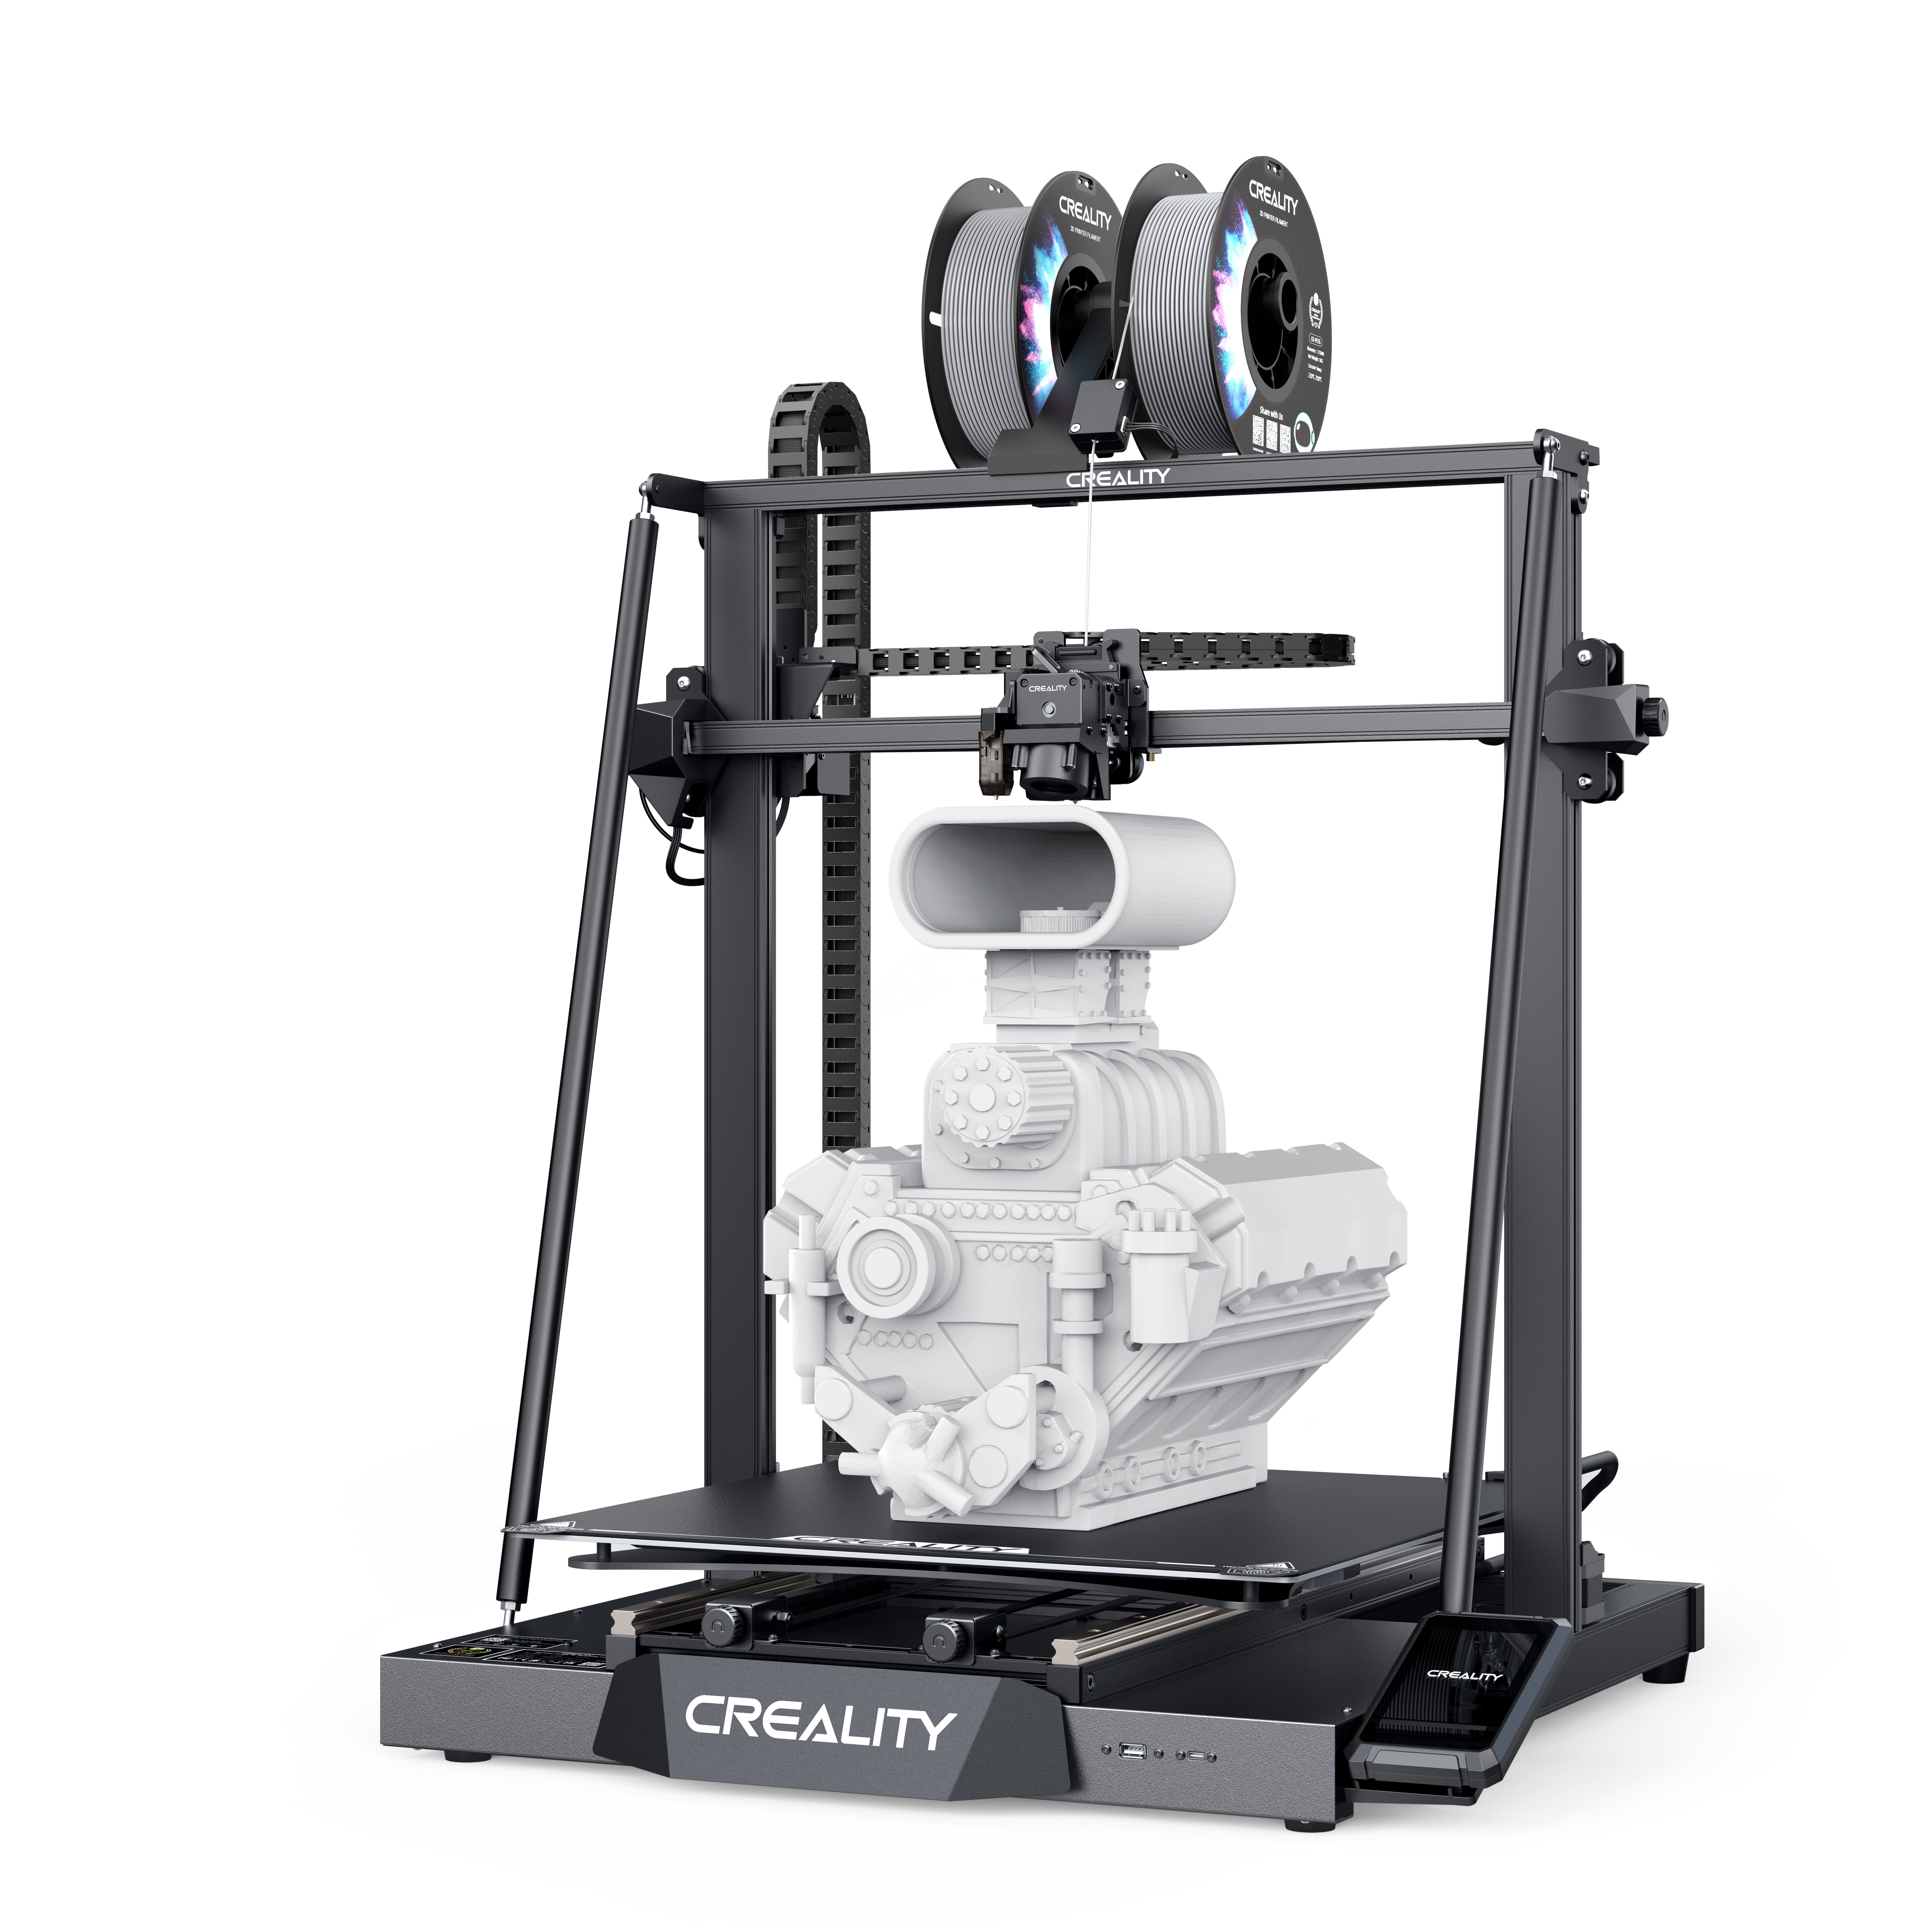 Creality-UK-official-store-CR-M4-3D-printer-in-stock3-Q2N.jpg